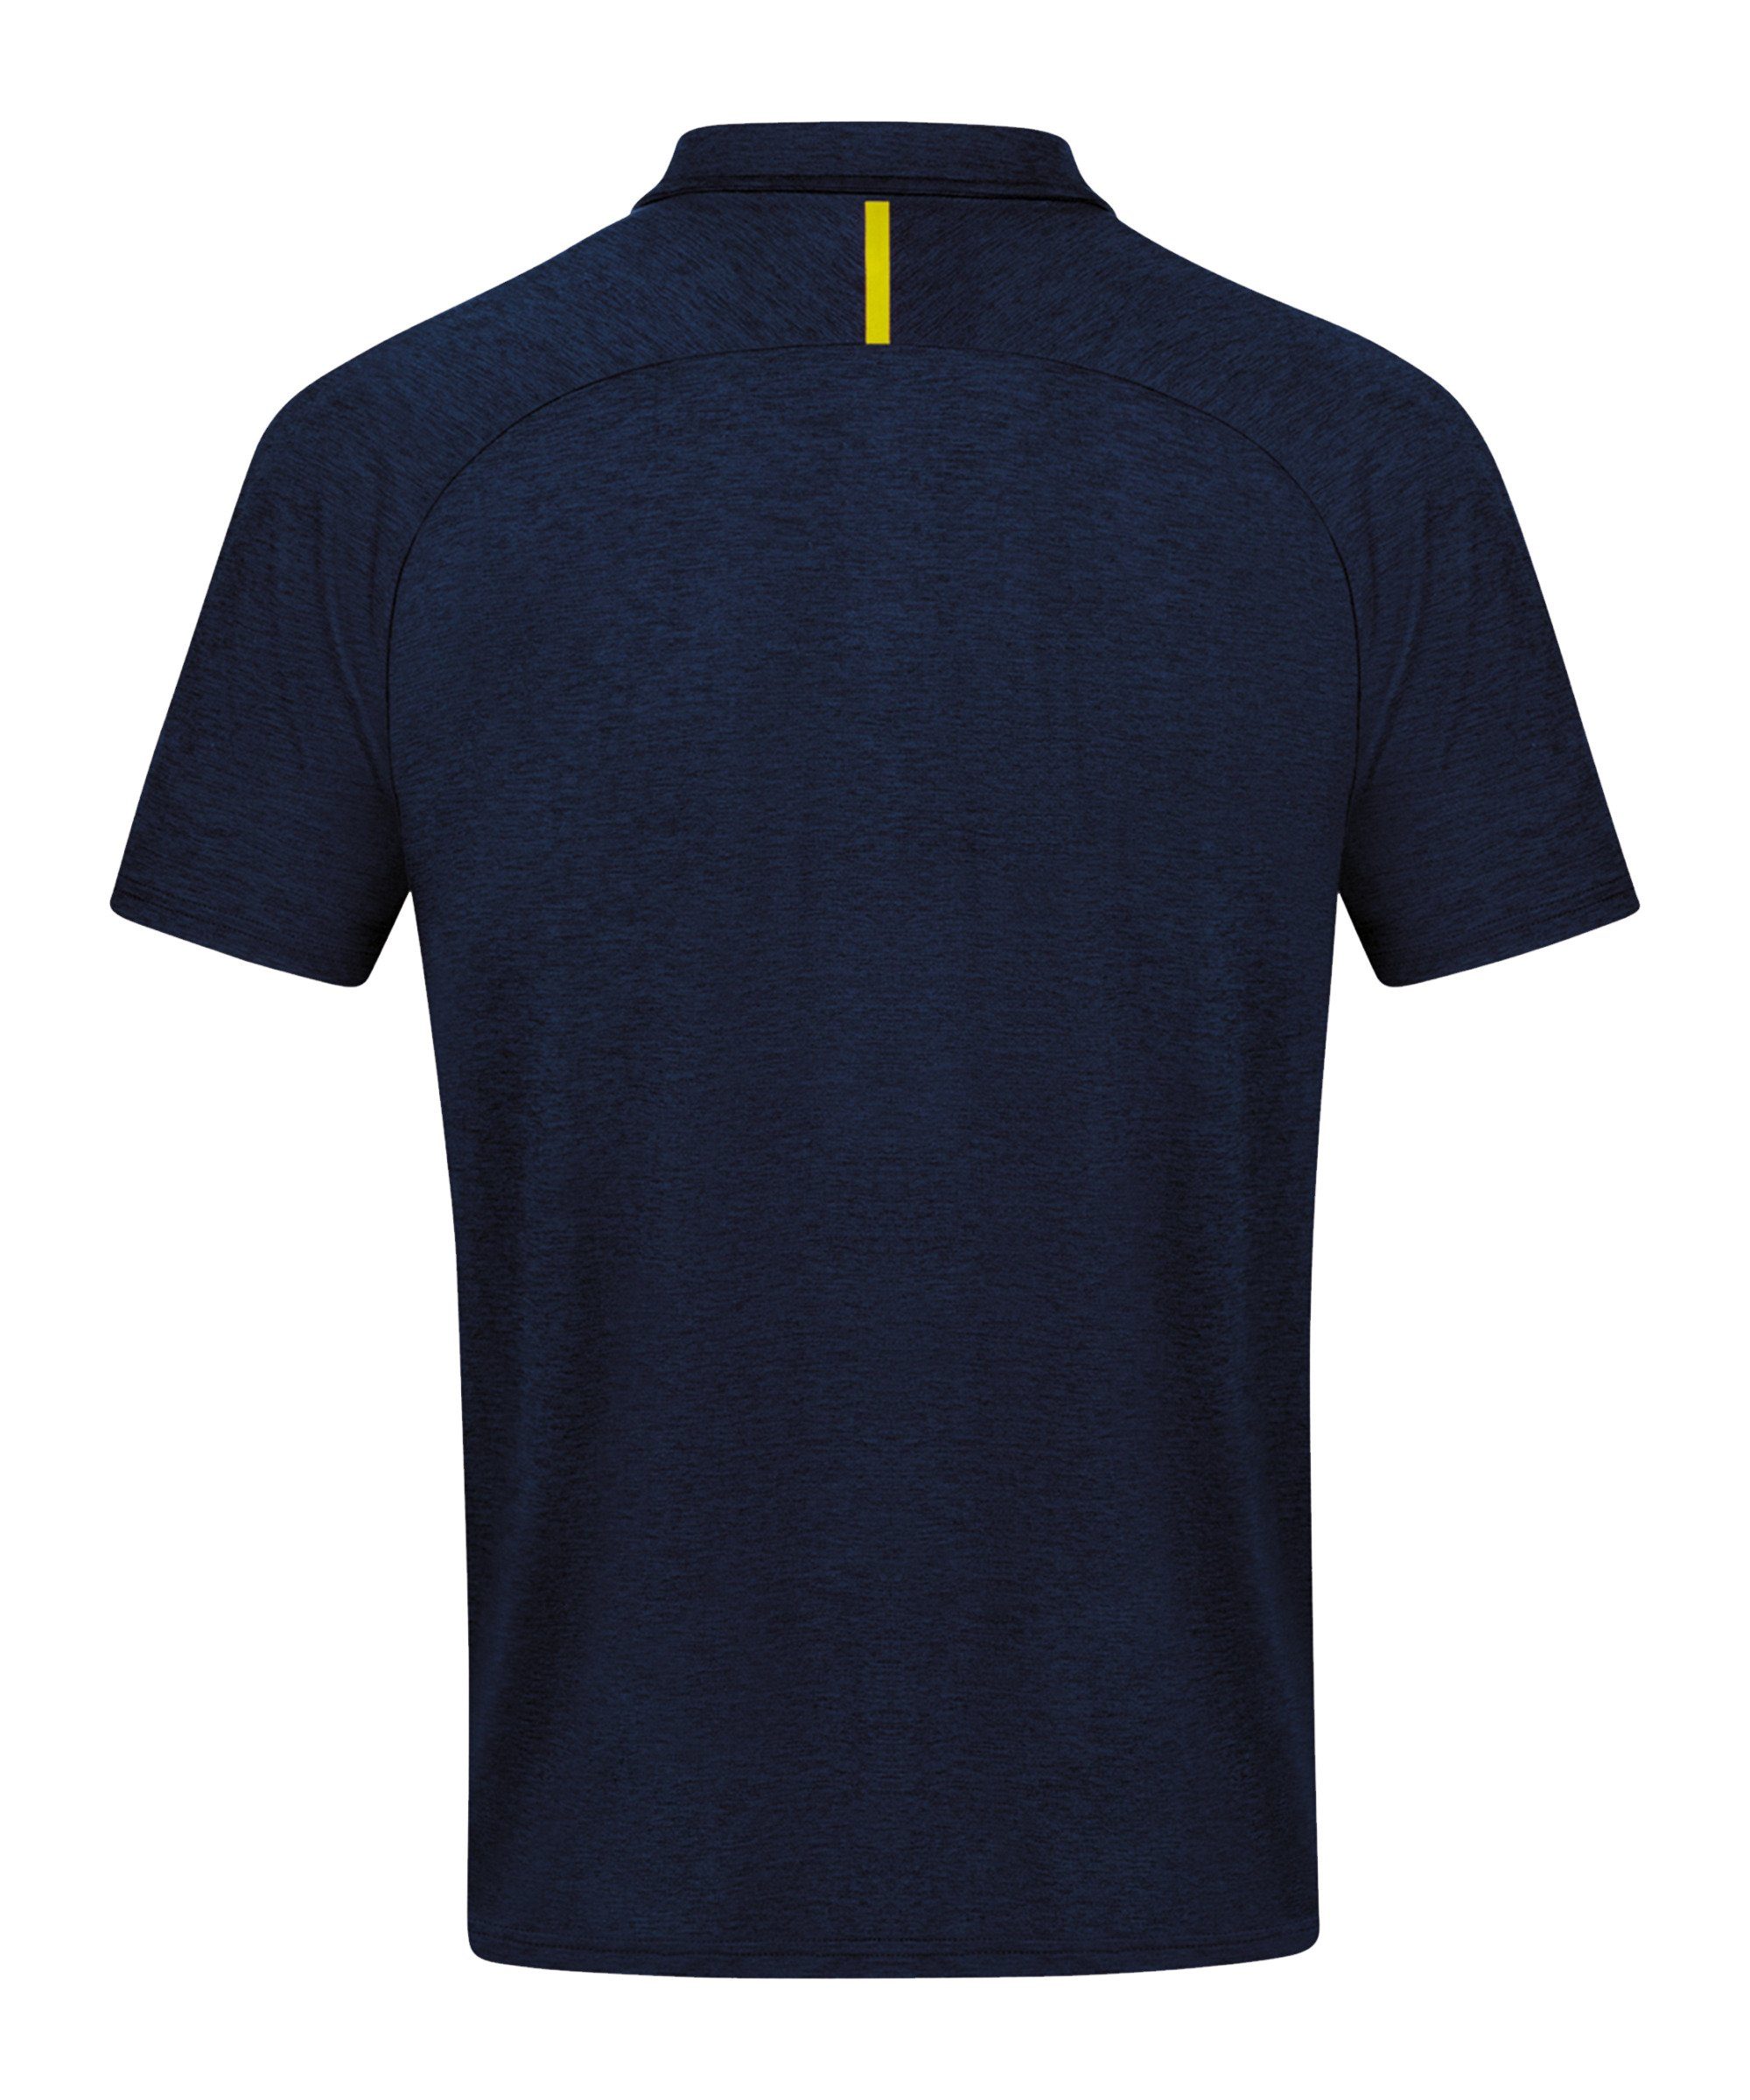 T-Shirt Polo blaugelb Challenge default Jako